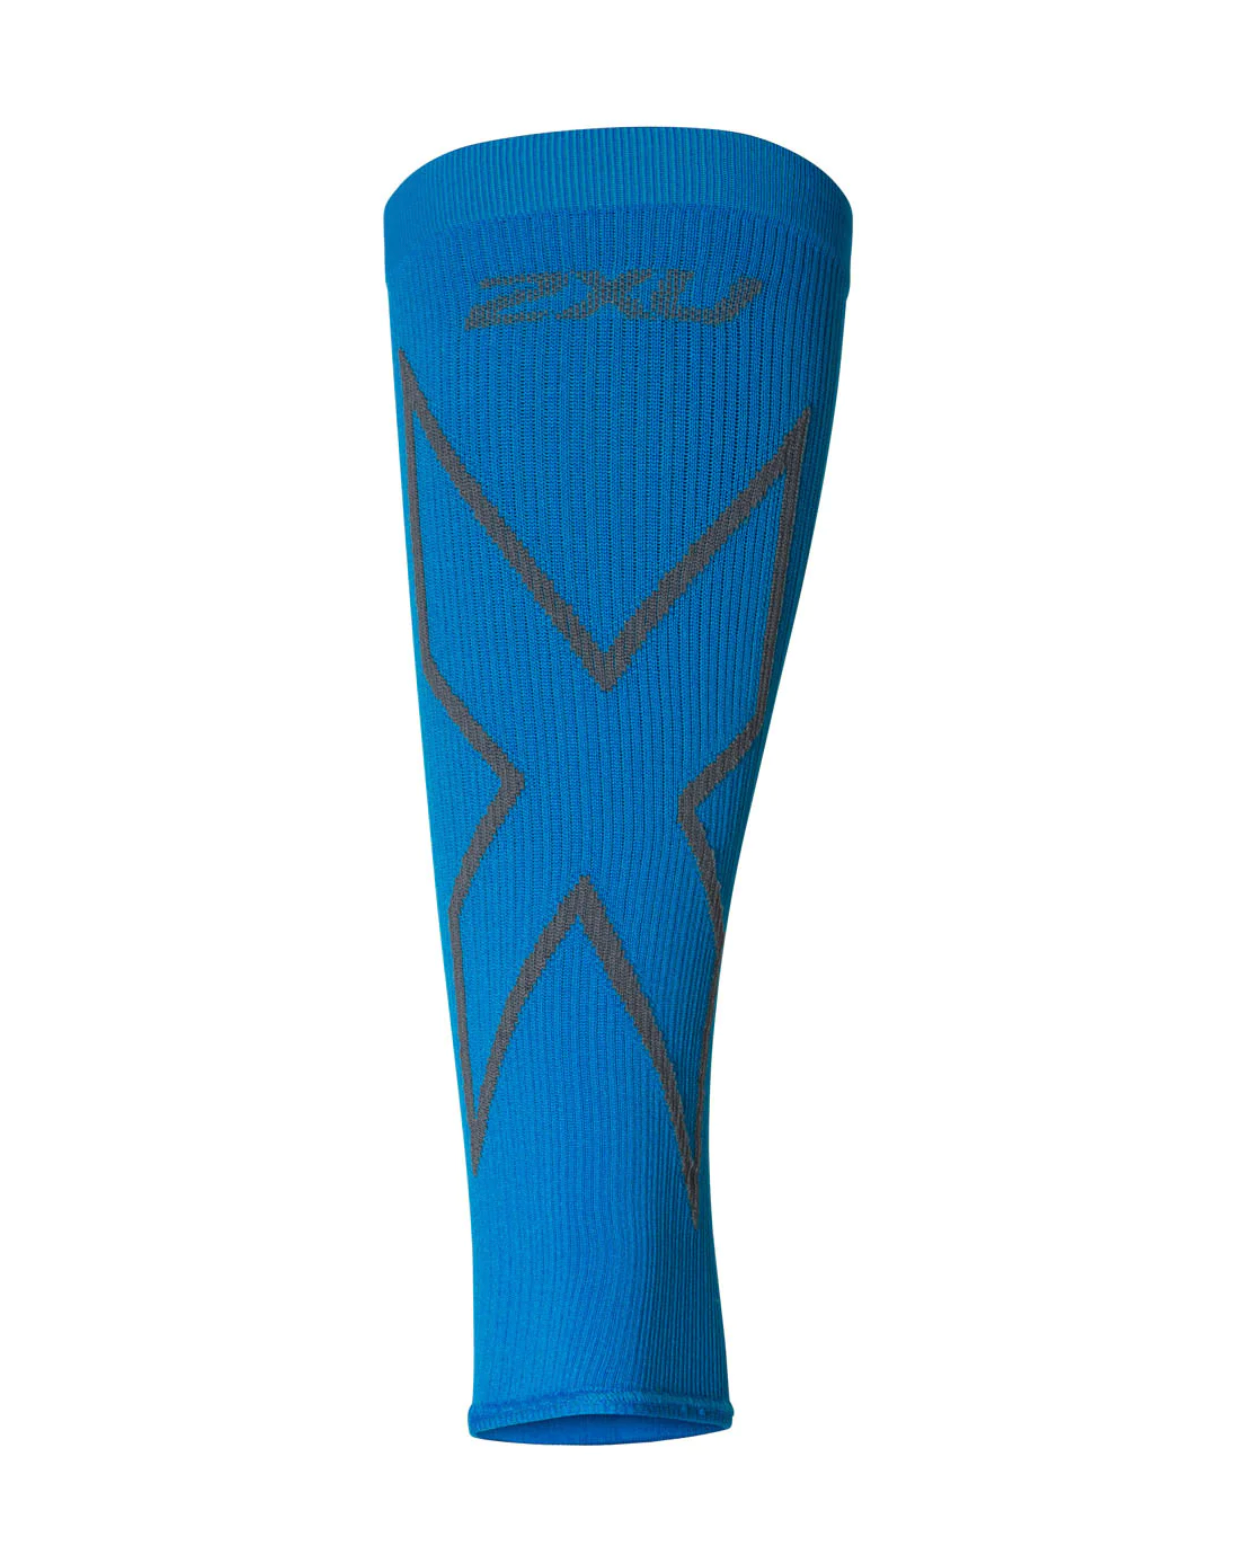 Gemeleras X Compression Calf Sleeves - Vibrant Blue/Grey - 2XU